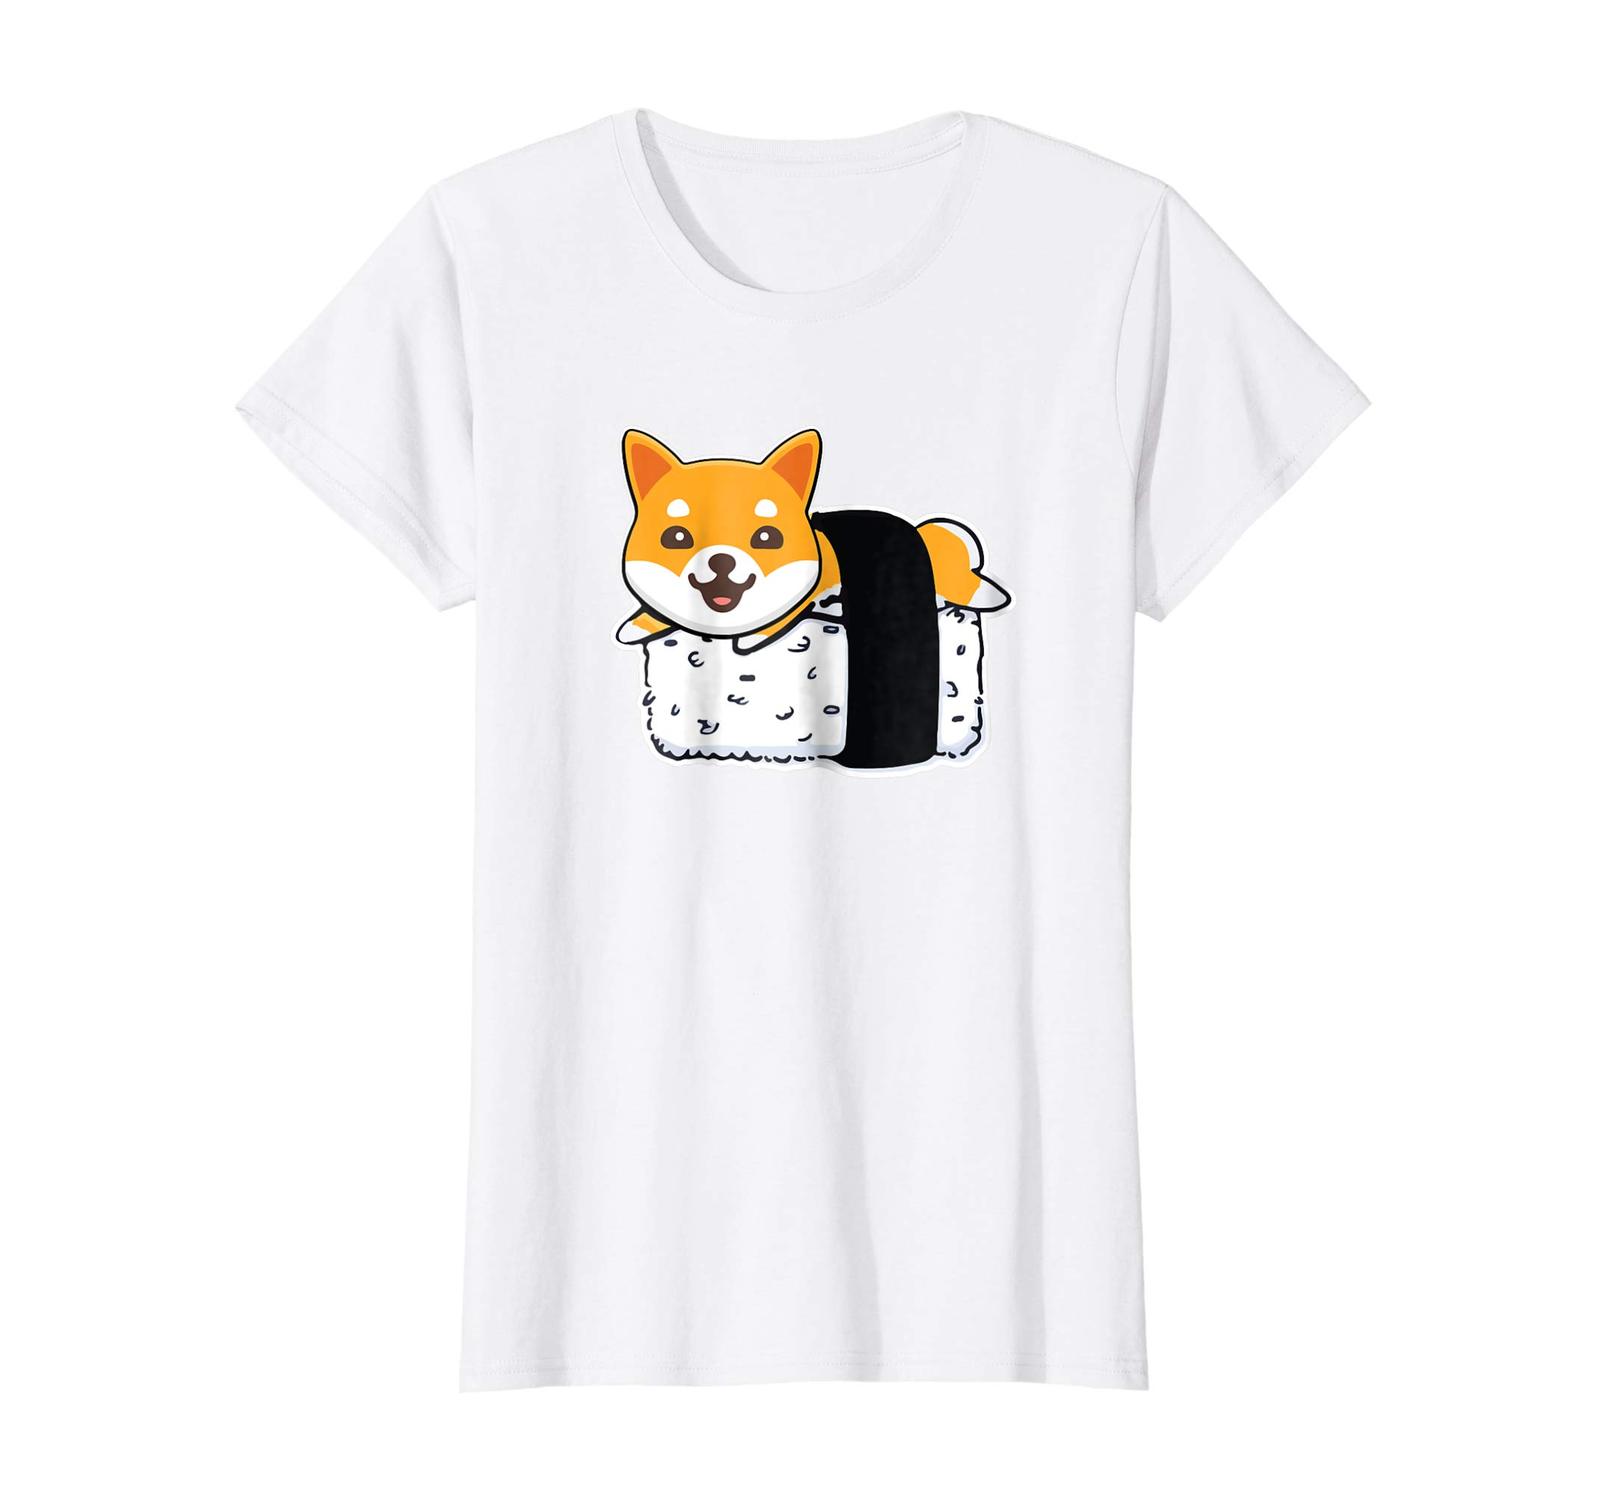 Dog Fashion - Cute Shiba Inu Sushi Shirt Doge Doggo Meme T-Shirt Wowen